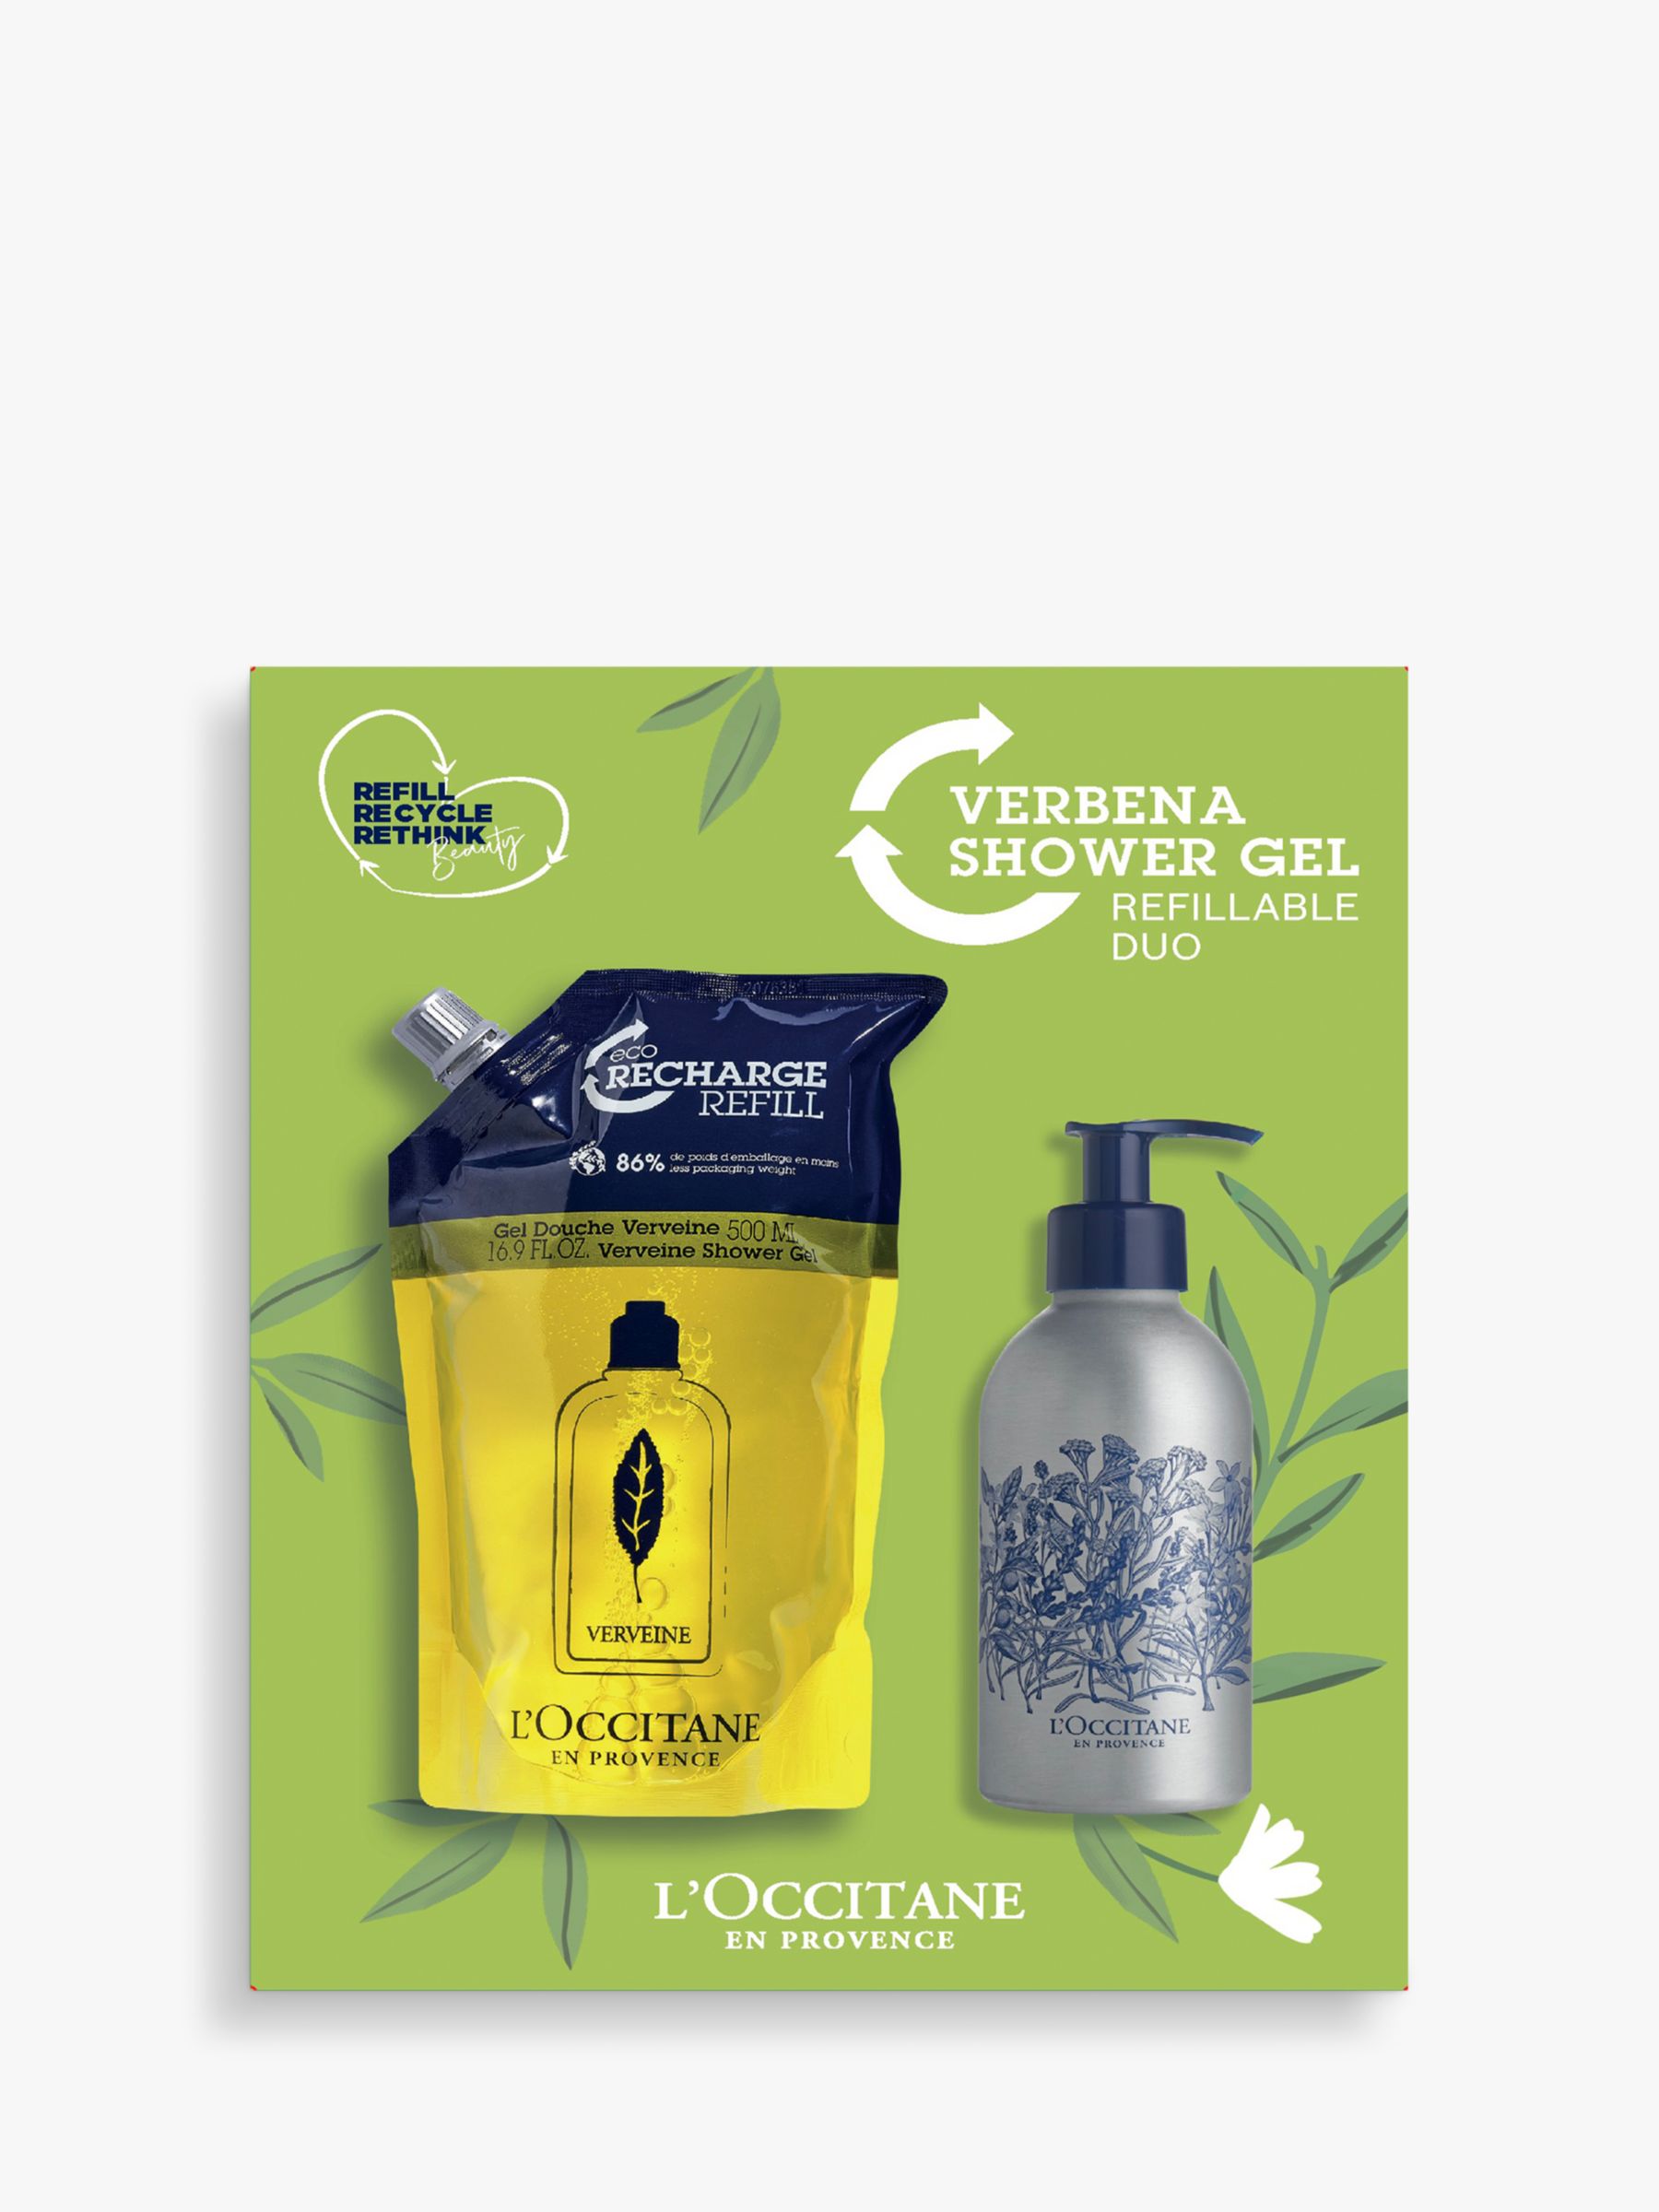 L'OCCITANE Verbena Shower Gel Refill Duo Bodycare Gift Set 1